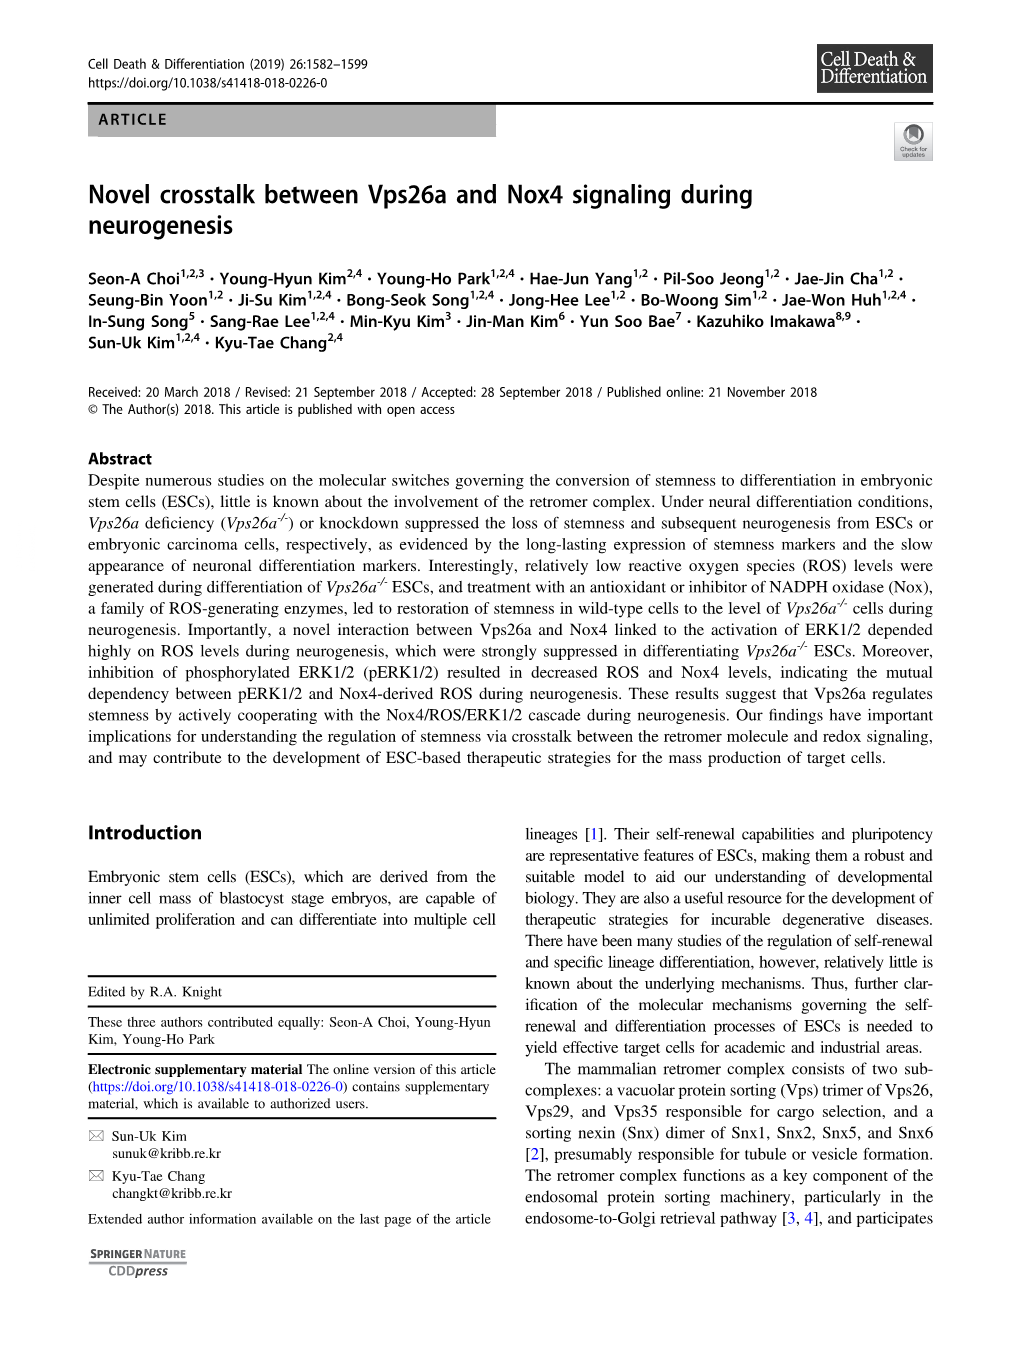 Novel Crosstalk Between Vps26a and Nox4 Signaling During Neurogenesis